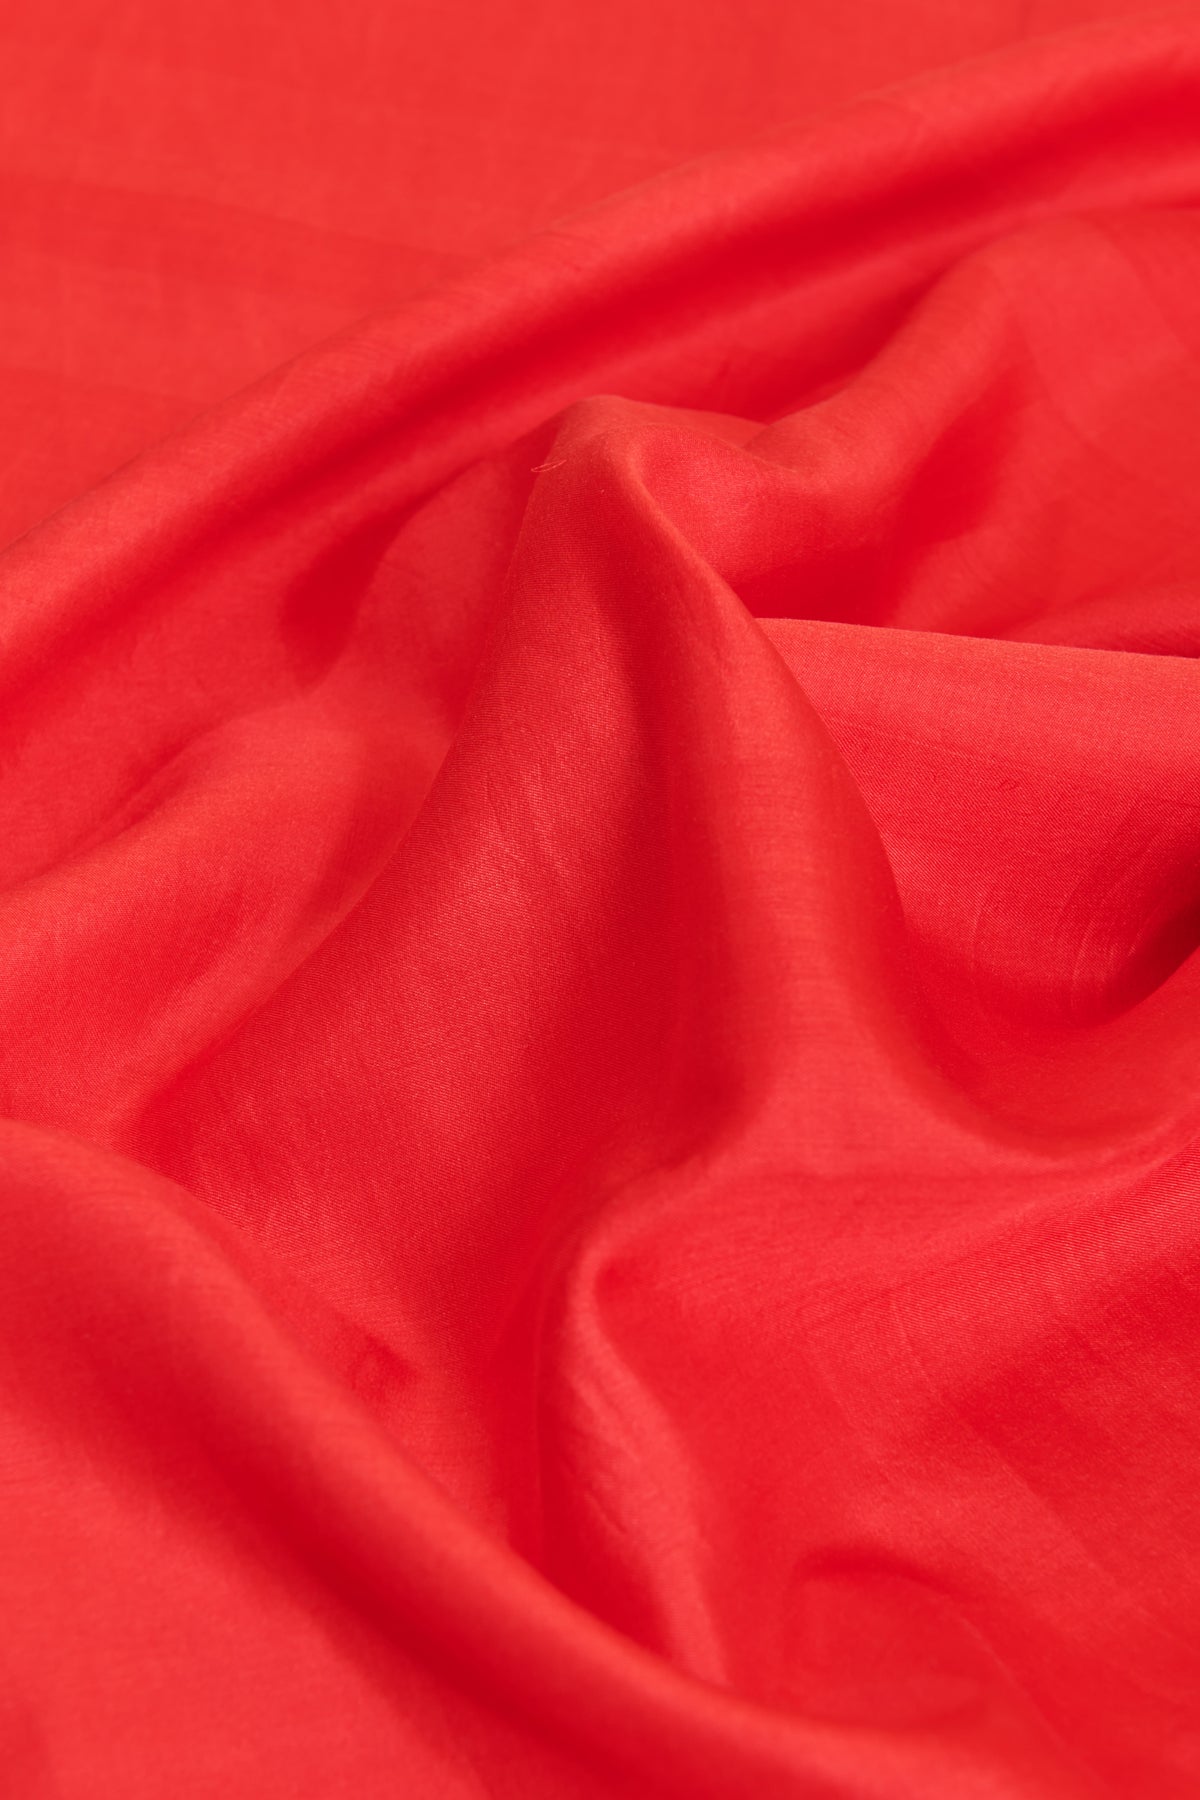 Red Silk Satin Blouse Fabric